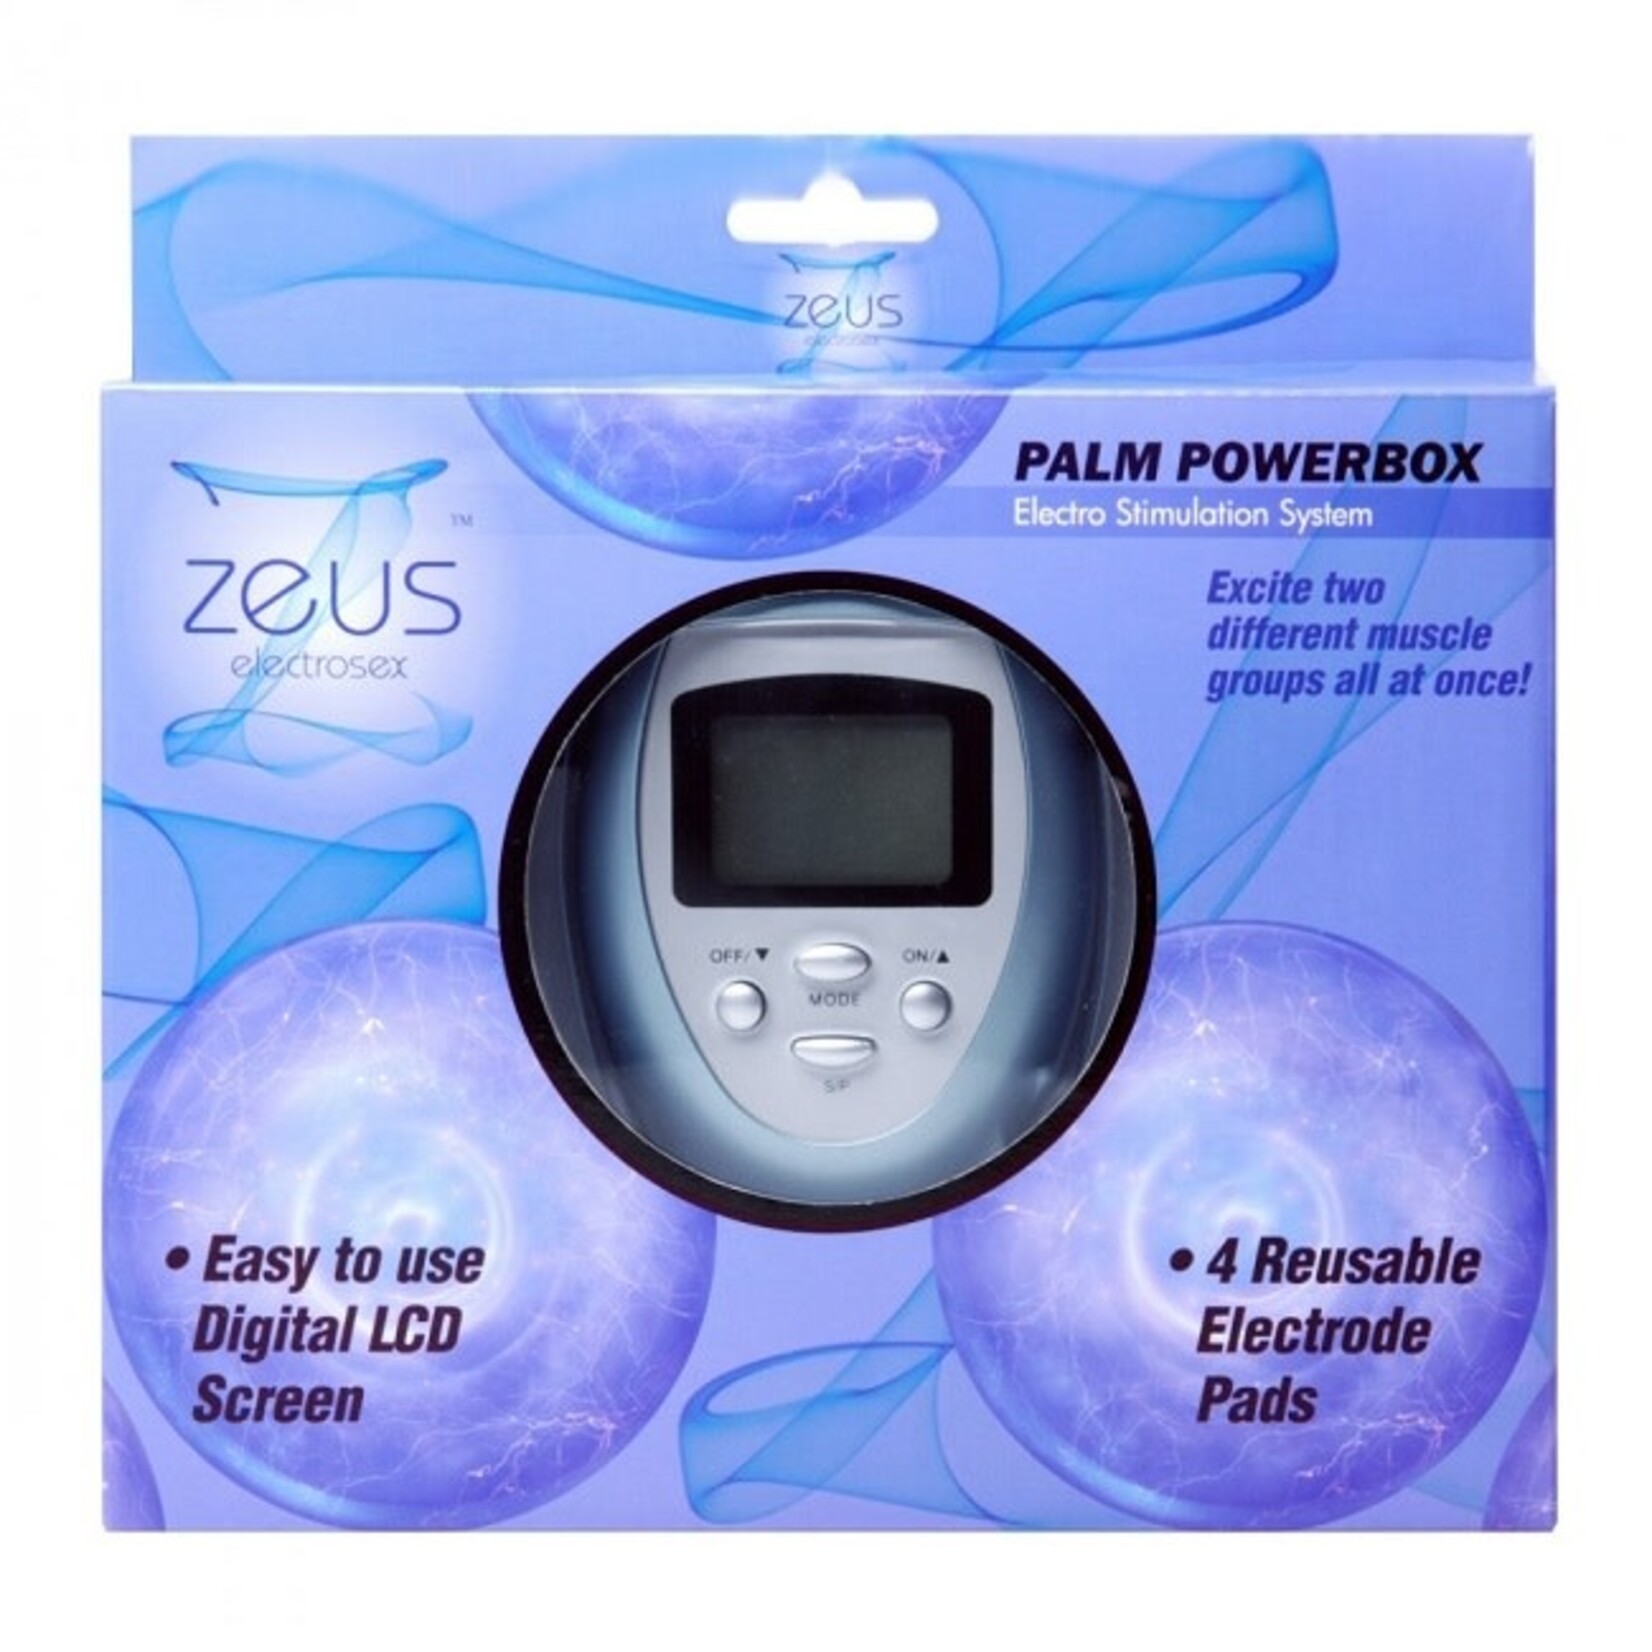 Zeus Electrosex Zeus Electrosex Palm Powerbox With Four Pads